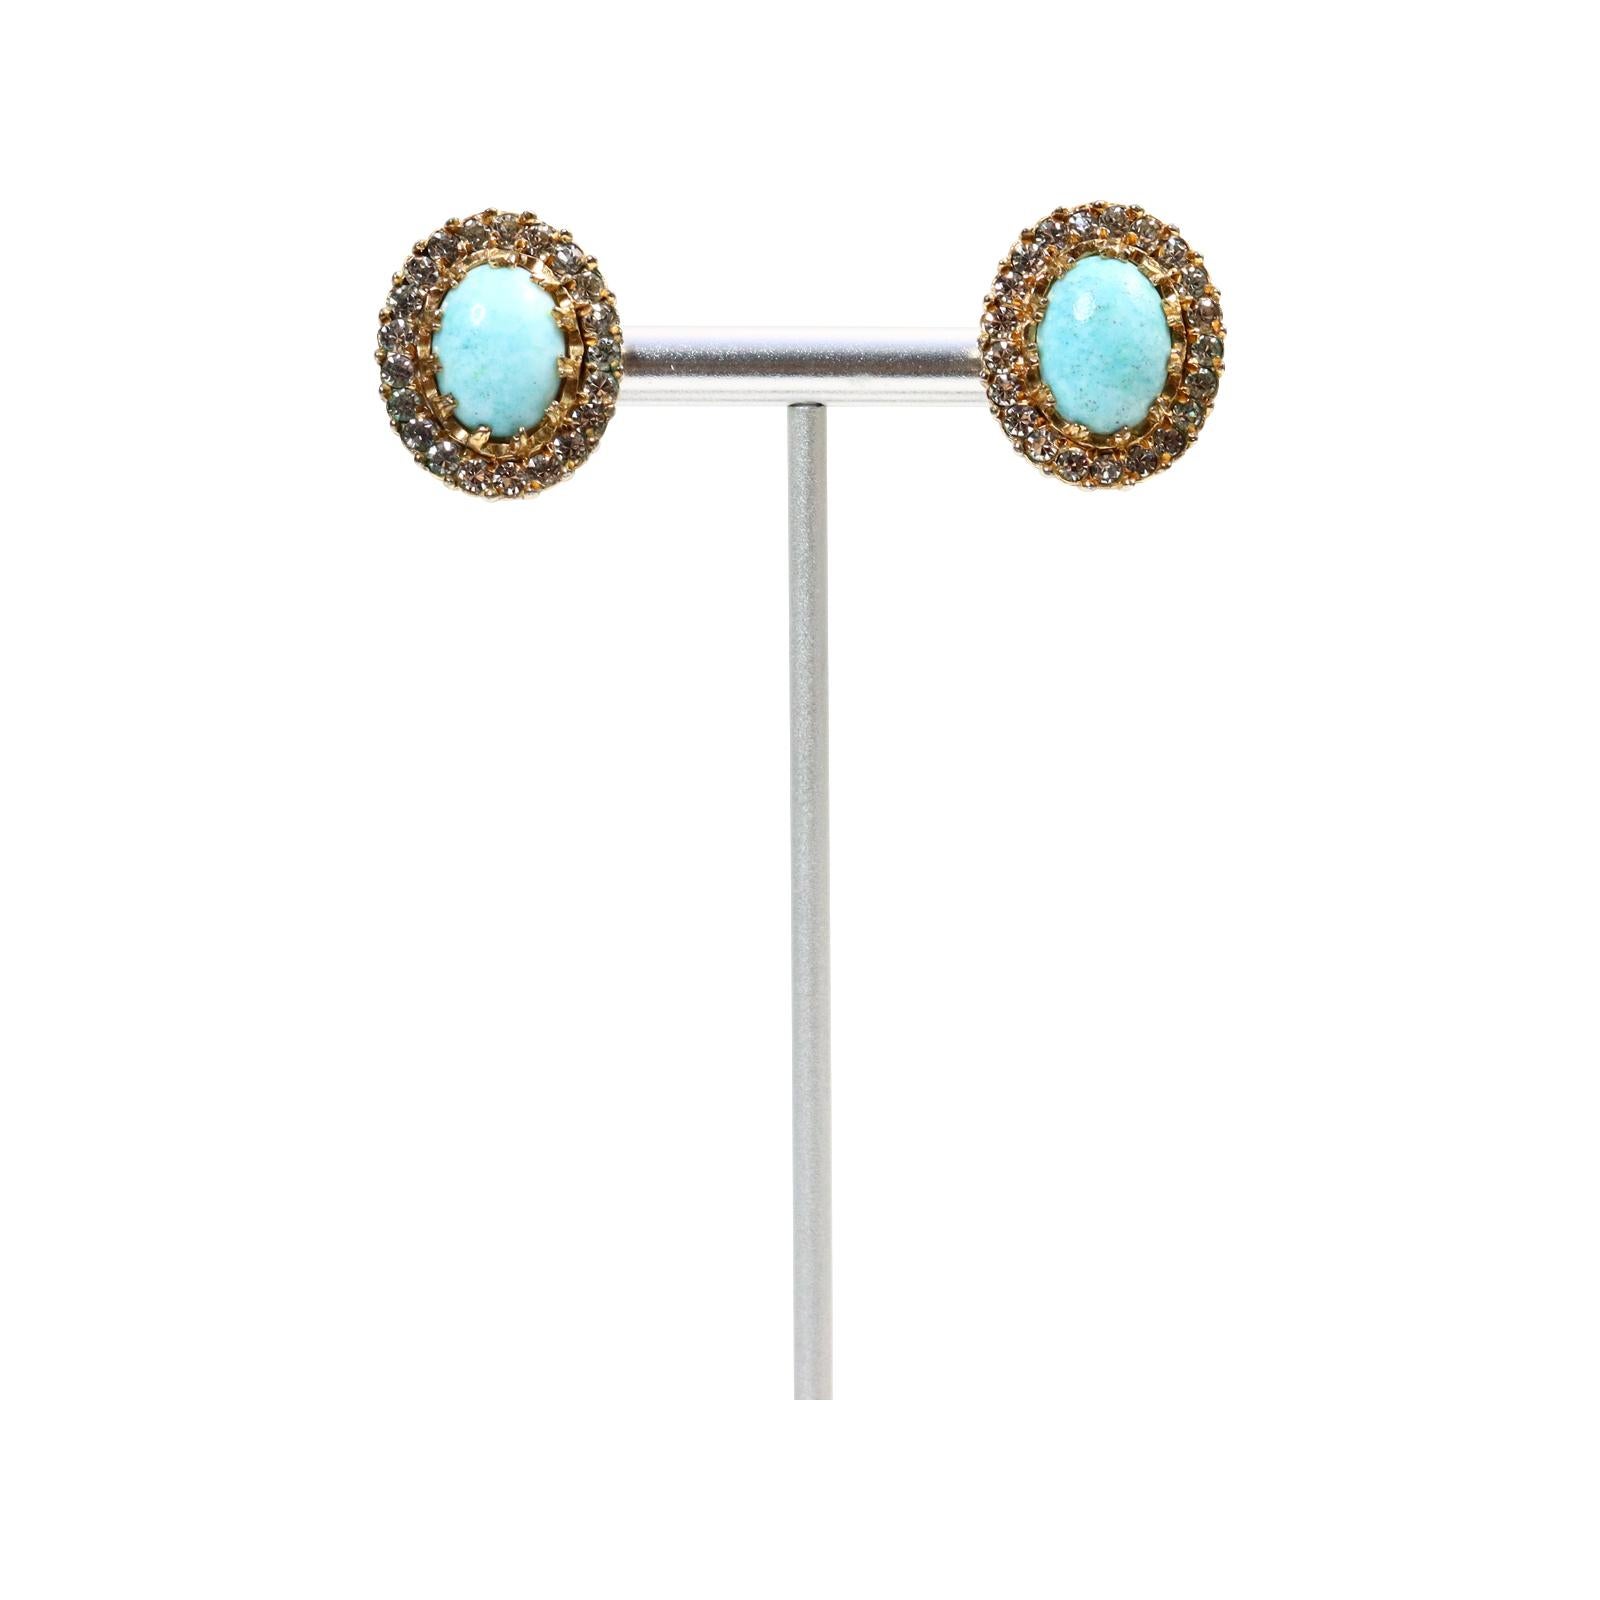 Vintage Nettie Rosenstein Faux Turquoise Diamante Earrings, circa 1960s For Sale 2